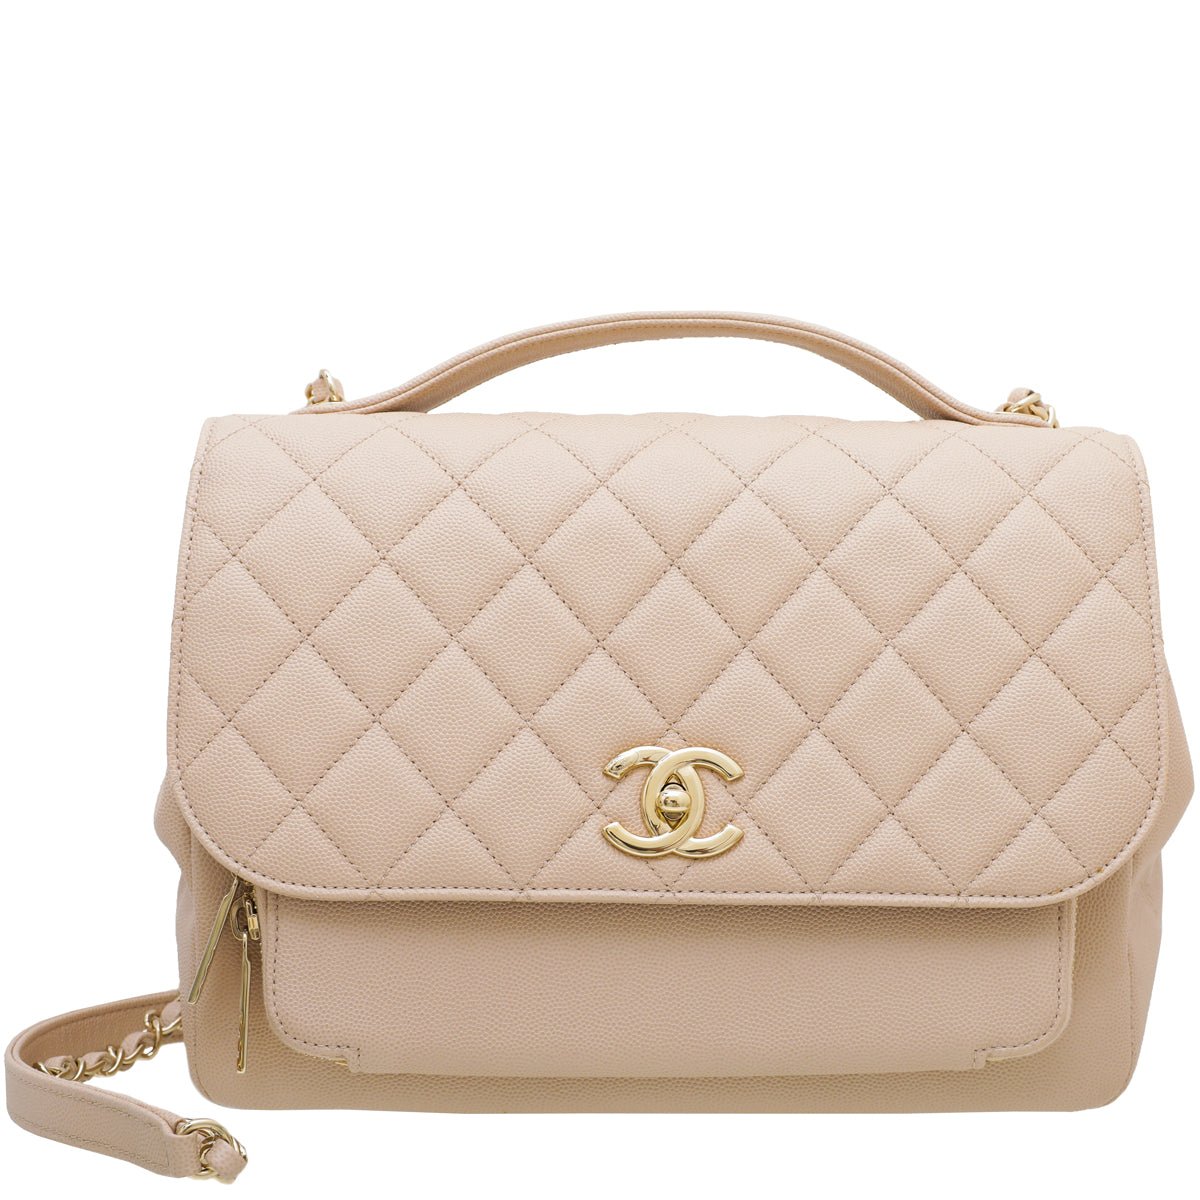 The Closet - Chanel Beige CC Business Affinity Large Bag | The Closet